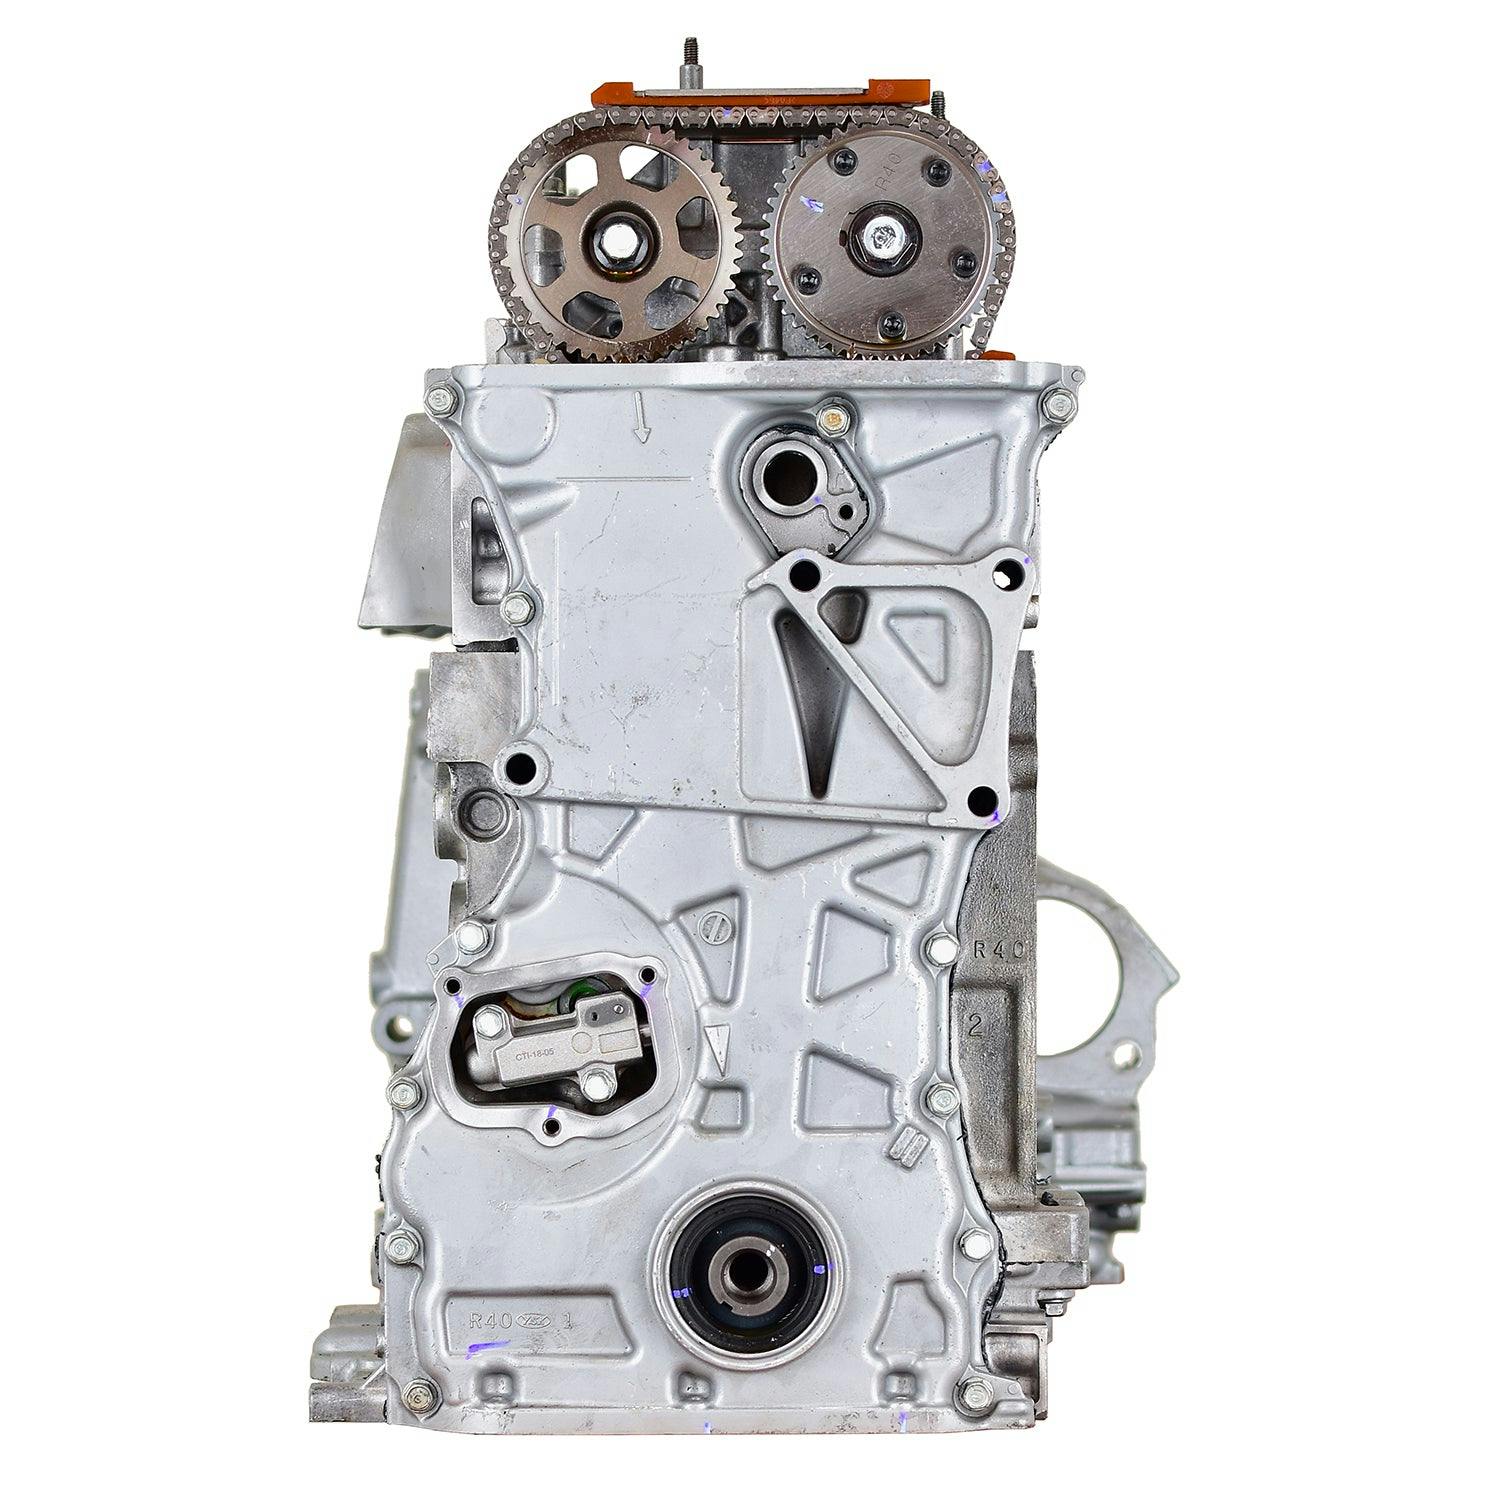 2.4L Inline-4 Engine for 2007-2009 Honda CR-V